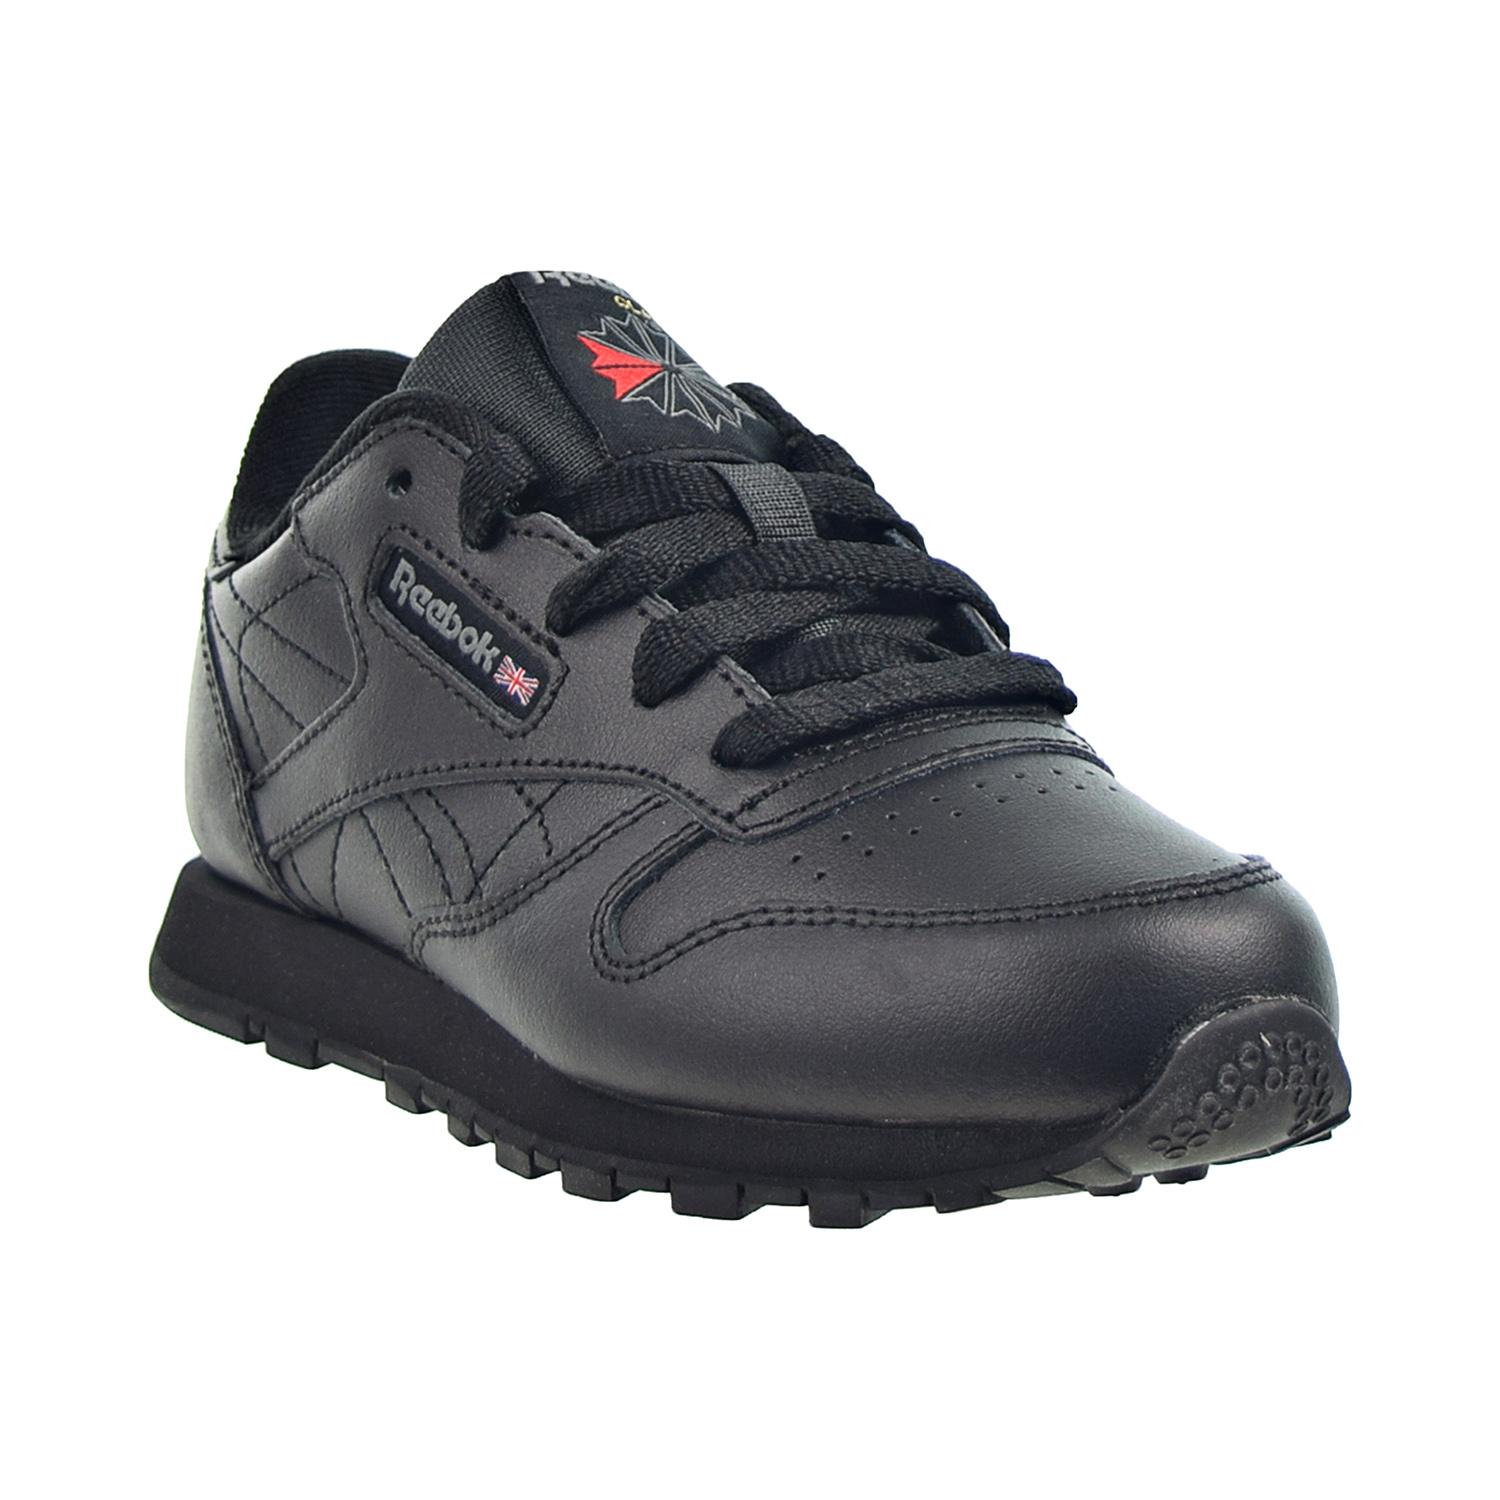 Reebok Classic Leather Little Kids' Shoes Black 50169